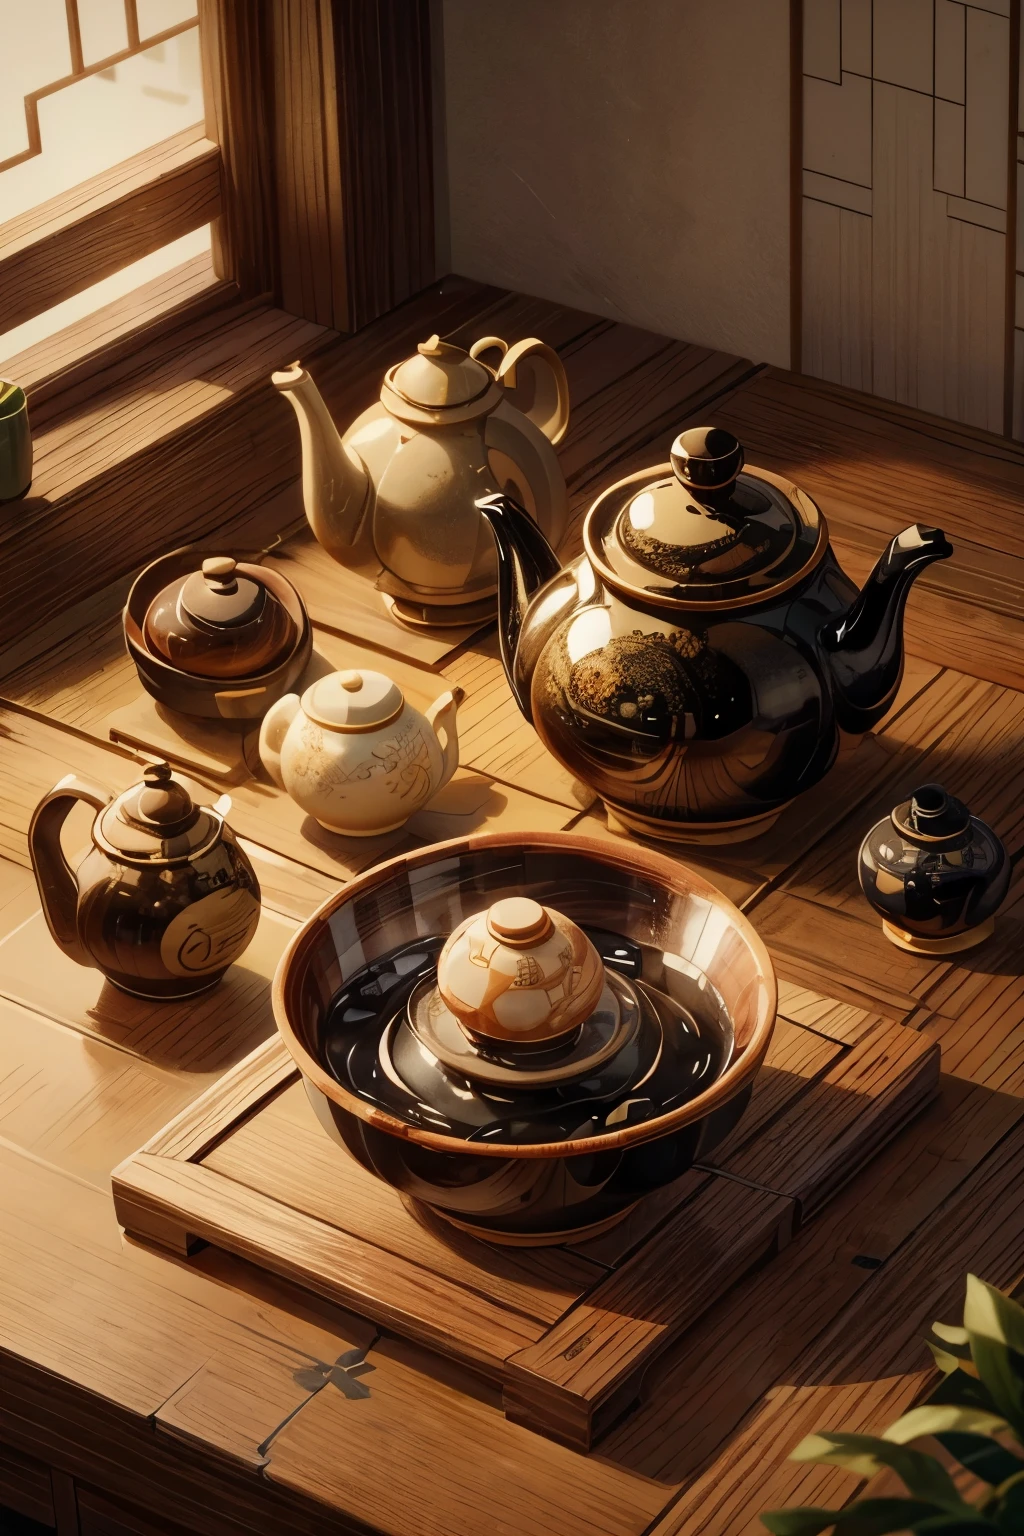 On the bowl is placed a Teekanne, inspiriert von Sesshū Tōyō, Wasserkocher, large black Wasserkocher on the hearth, Teekanne, Teekanne, Teekanne, wunderschönes Teeservice aus Porzellan, Teekanne: 1, inspiriert von Renzheng Doben, inspiriert von Kaiser Xuande, Keramik, smooth glazed Keramik